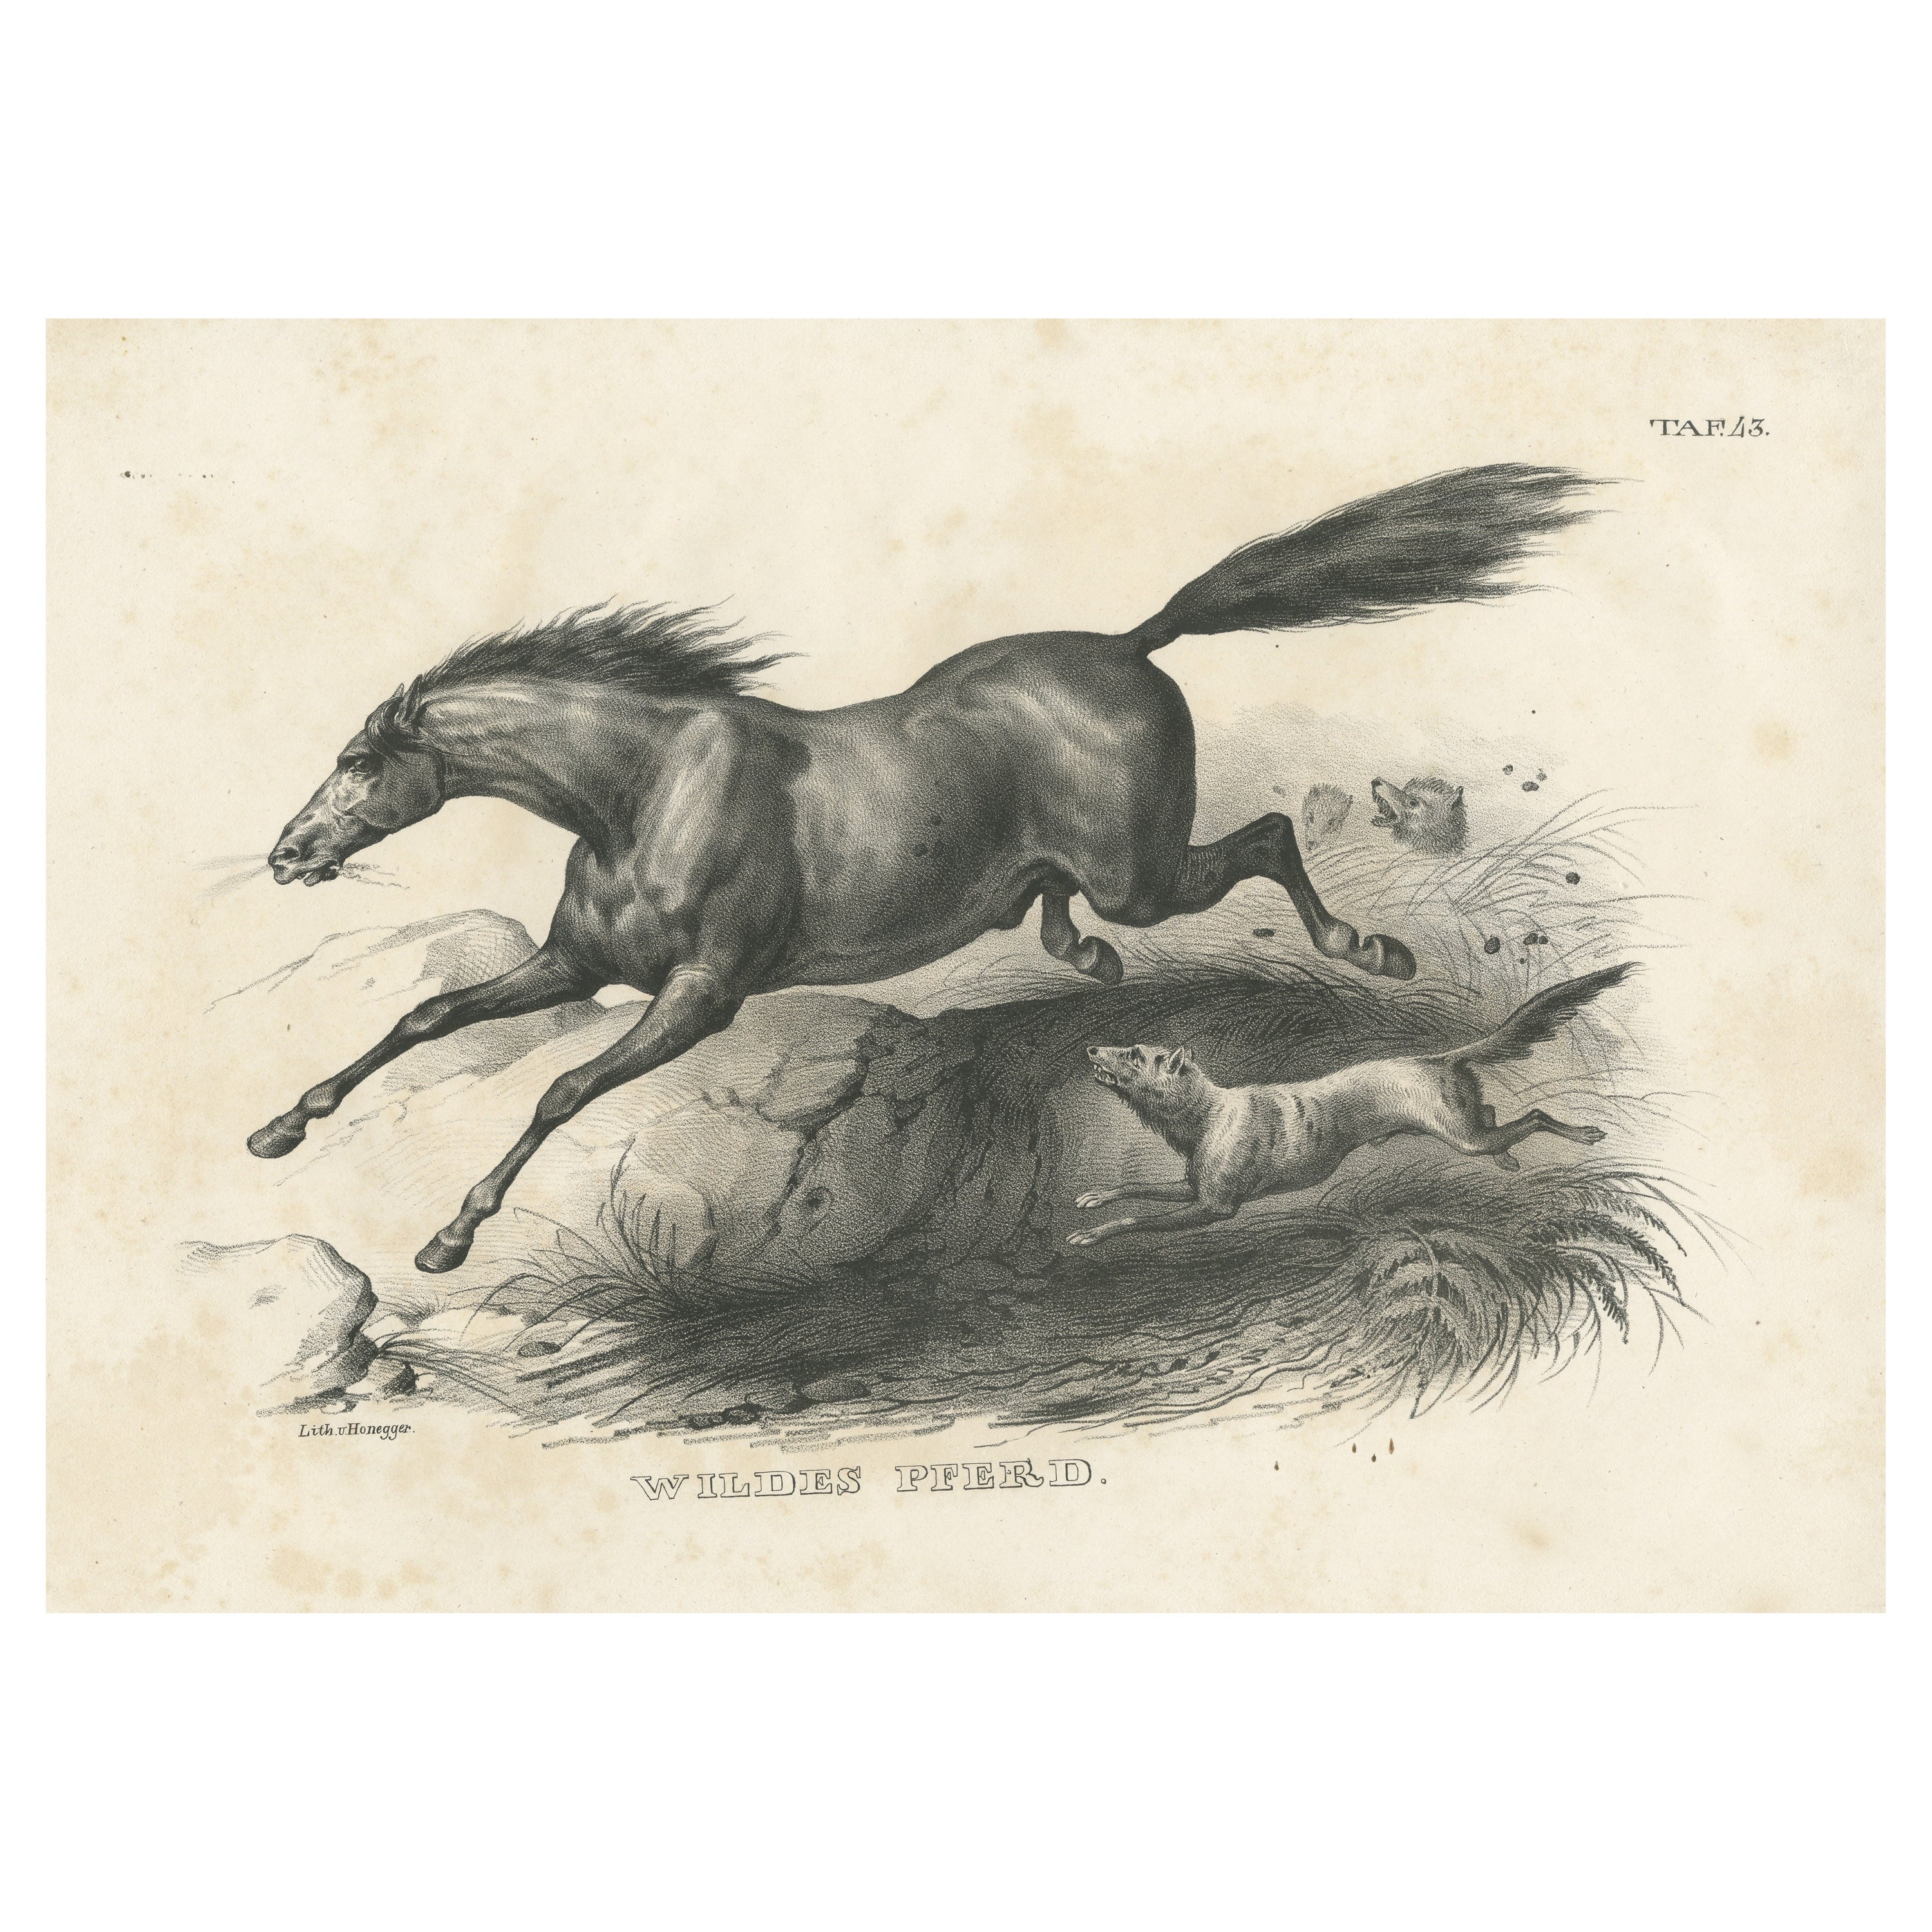 Original Antique Print of a Wild Horse